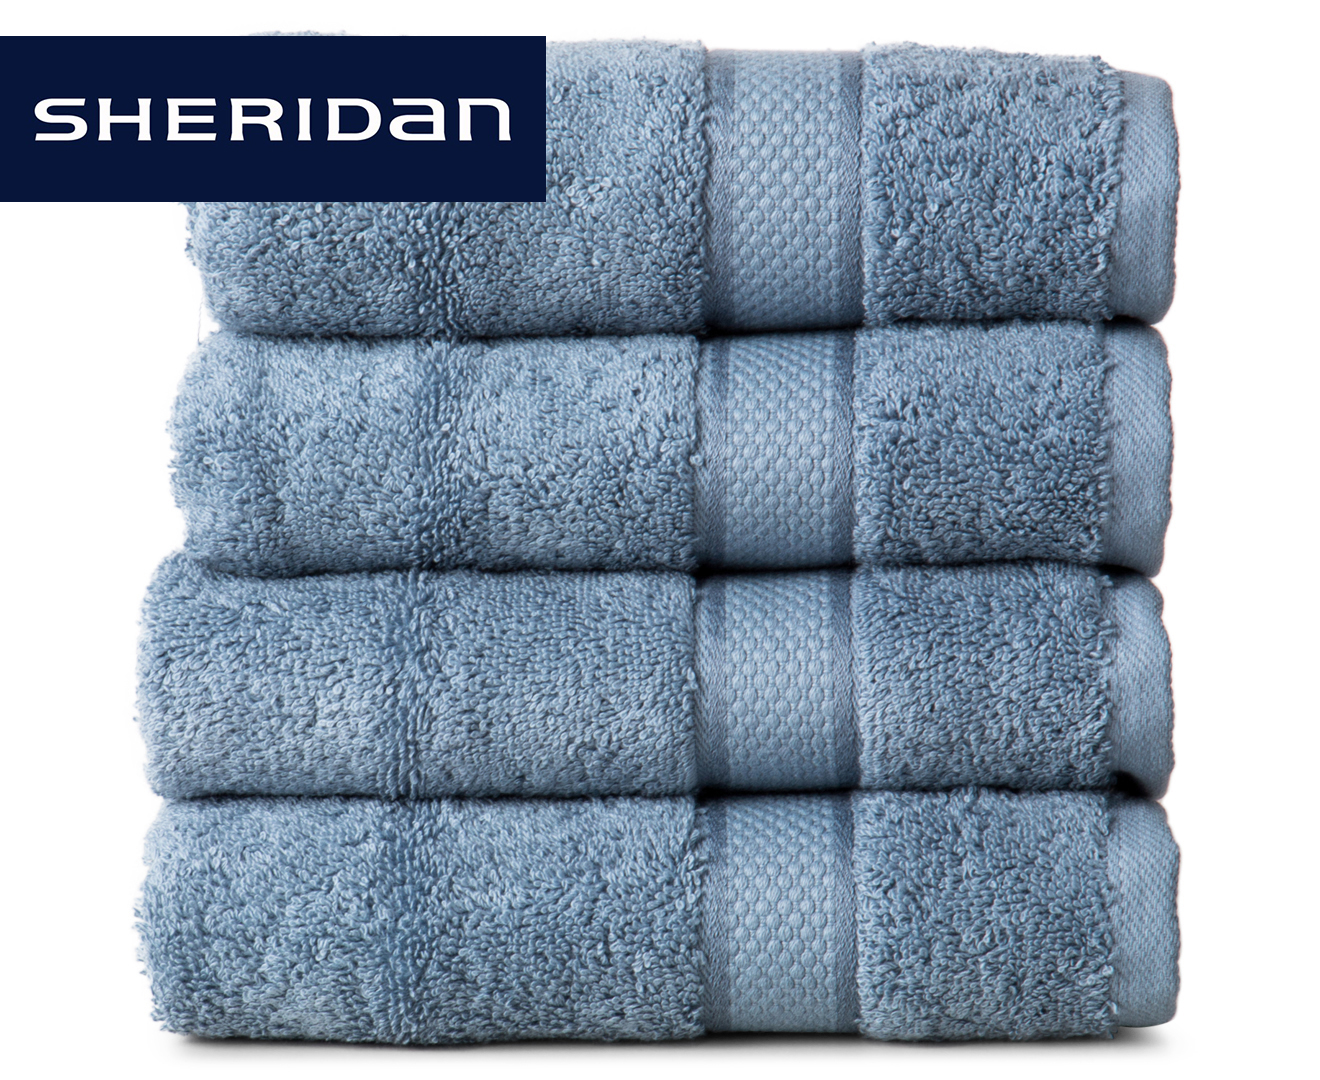 Sheridan Luxury Egyptian Hand Towel 4-Pack - Smokey Blue